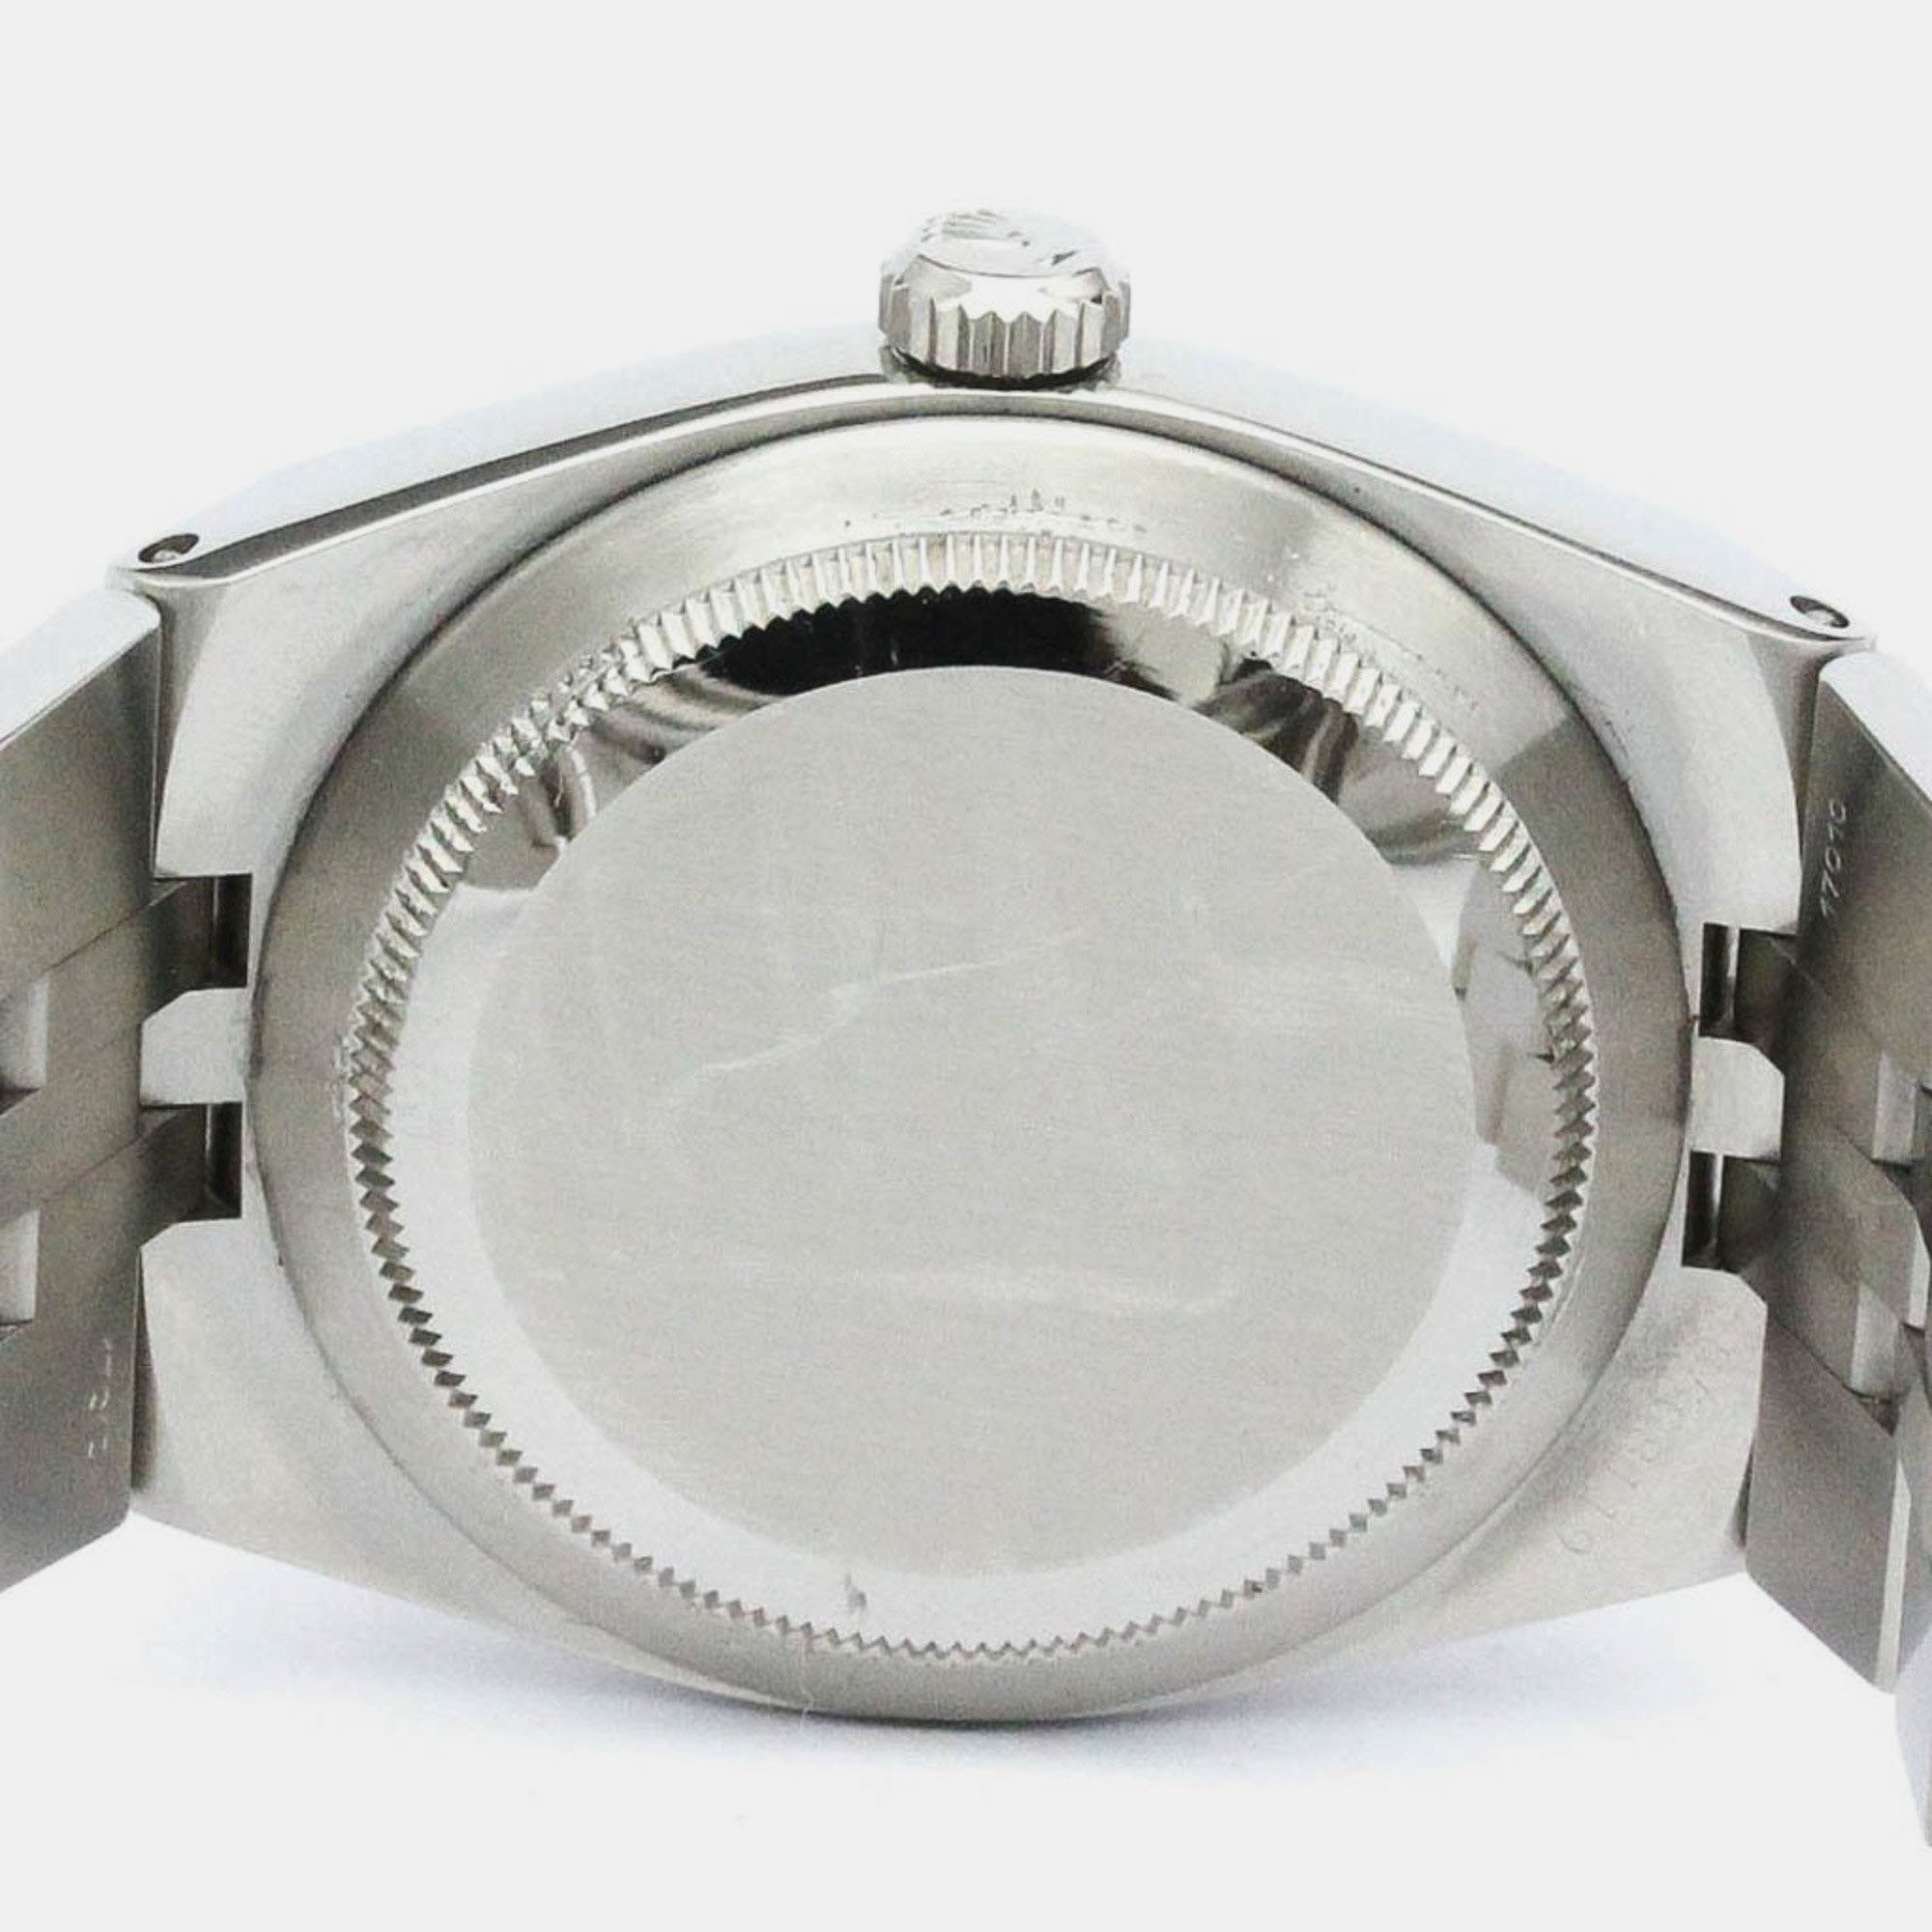 Rolex Silver 18k White Gold And Stainless Steel Datejust 17014 Quartz Men's Wristwatch 36 Mm